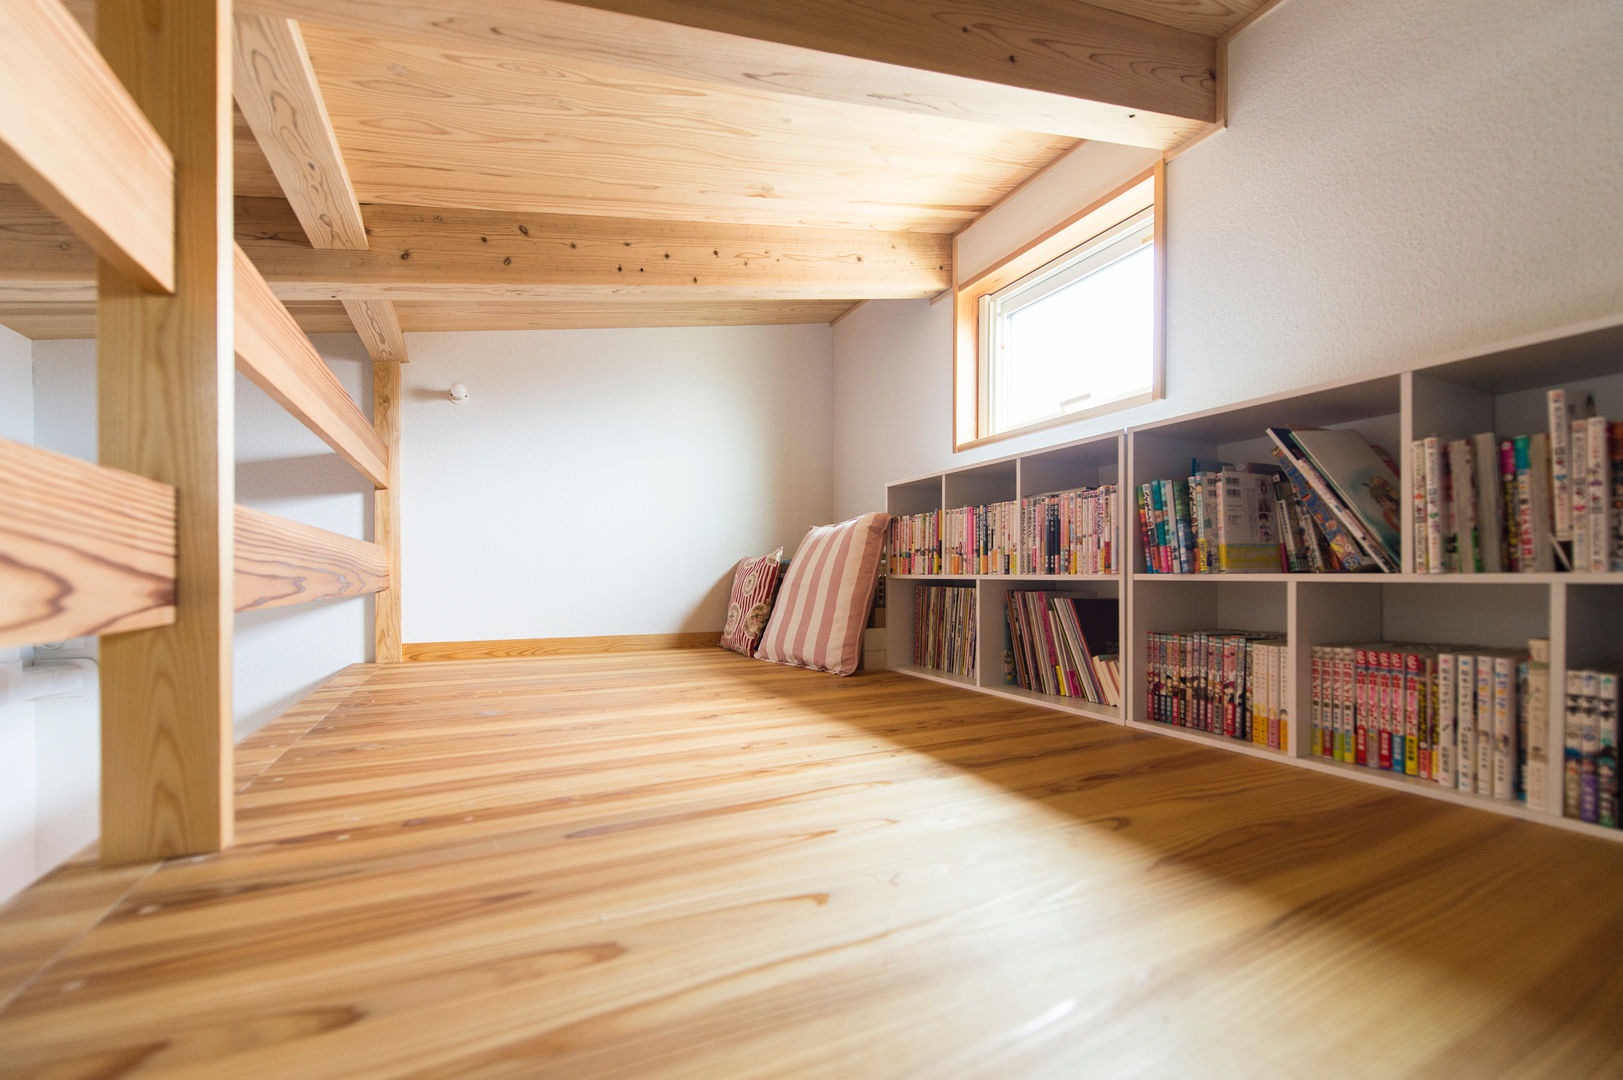 田村の家, Sola sekkei koubou Sola sekkei koubou Salle multimédia minimaliste